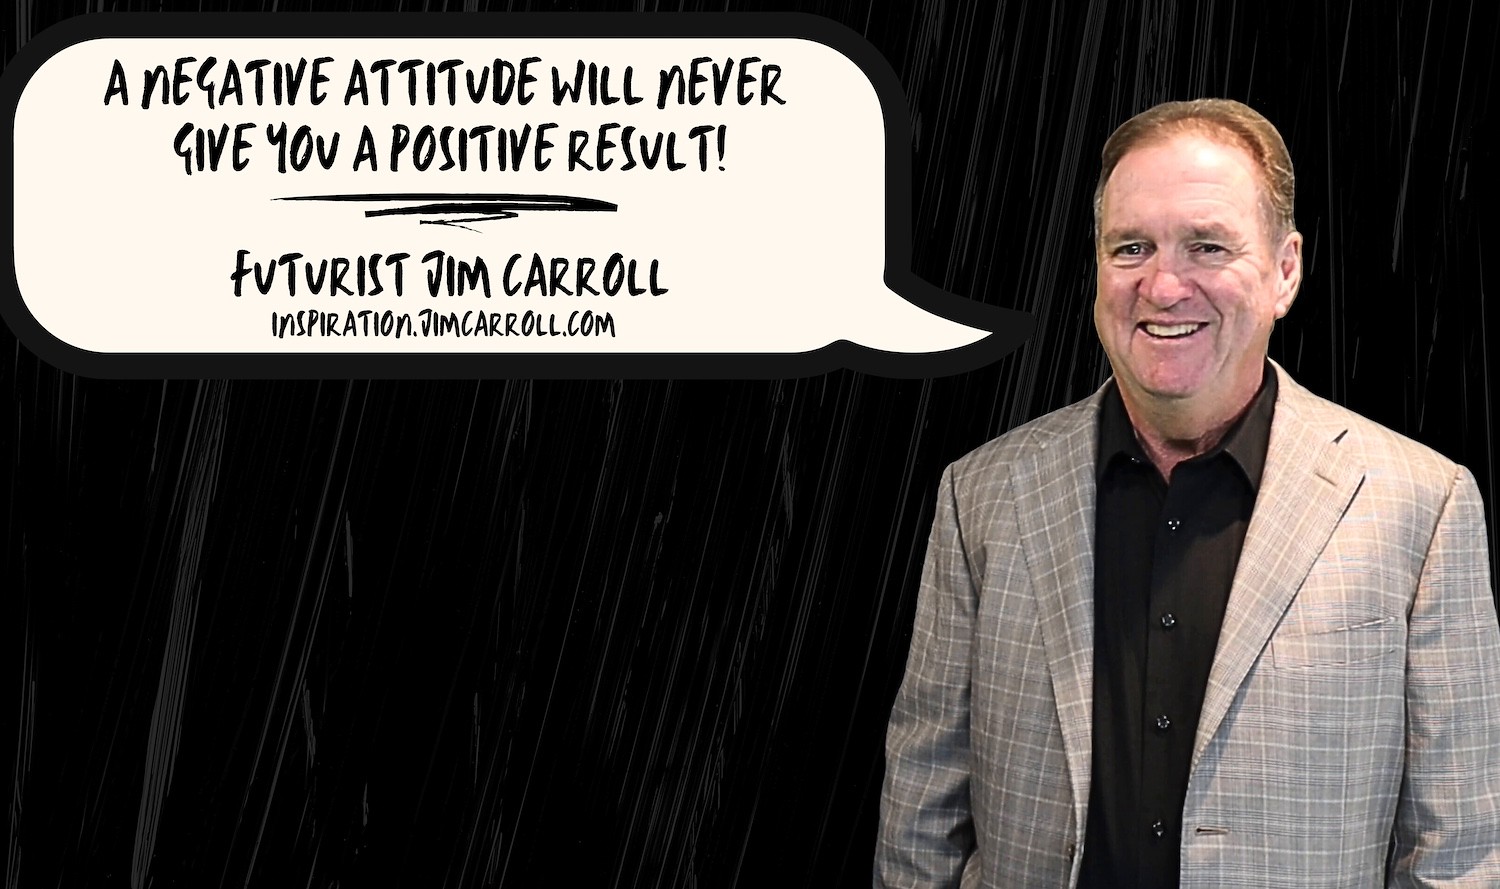 "A negative attitude will never give you a positive result!" - Futurist Jim Carroll